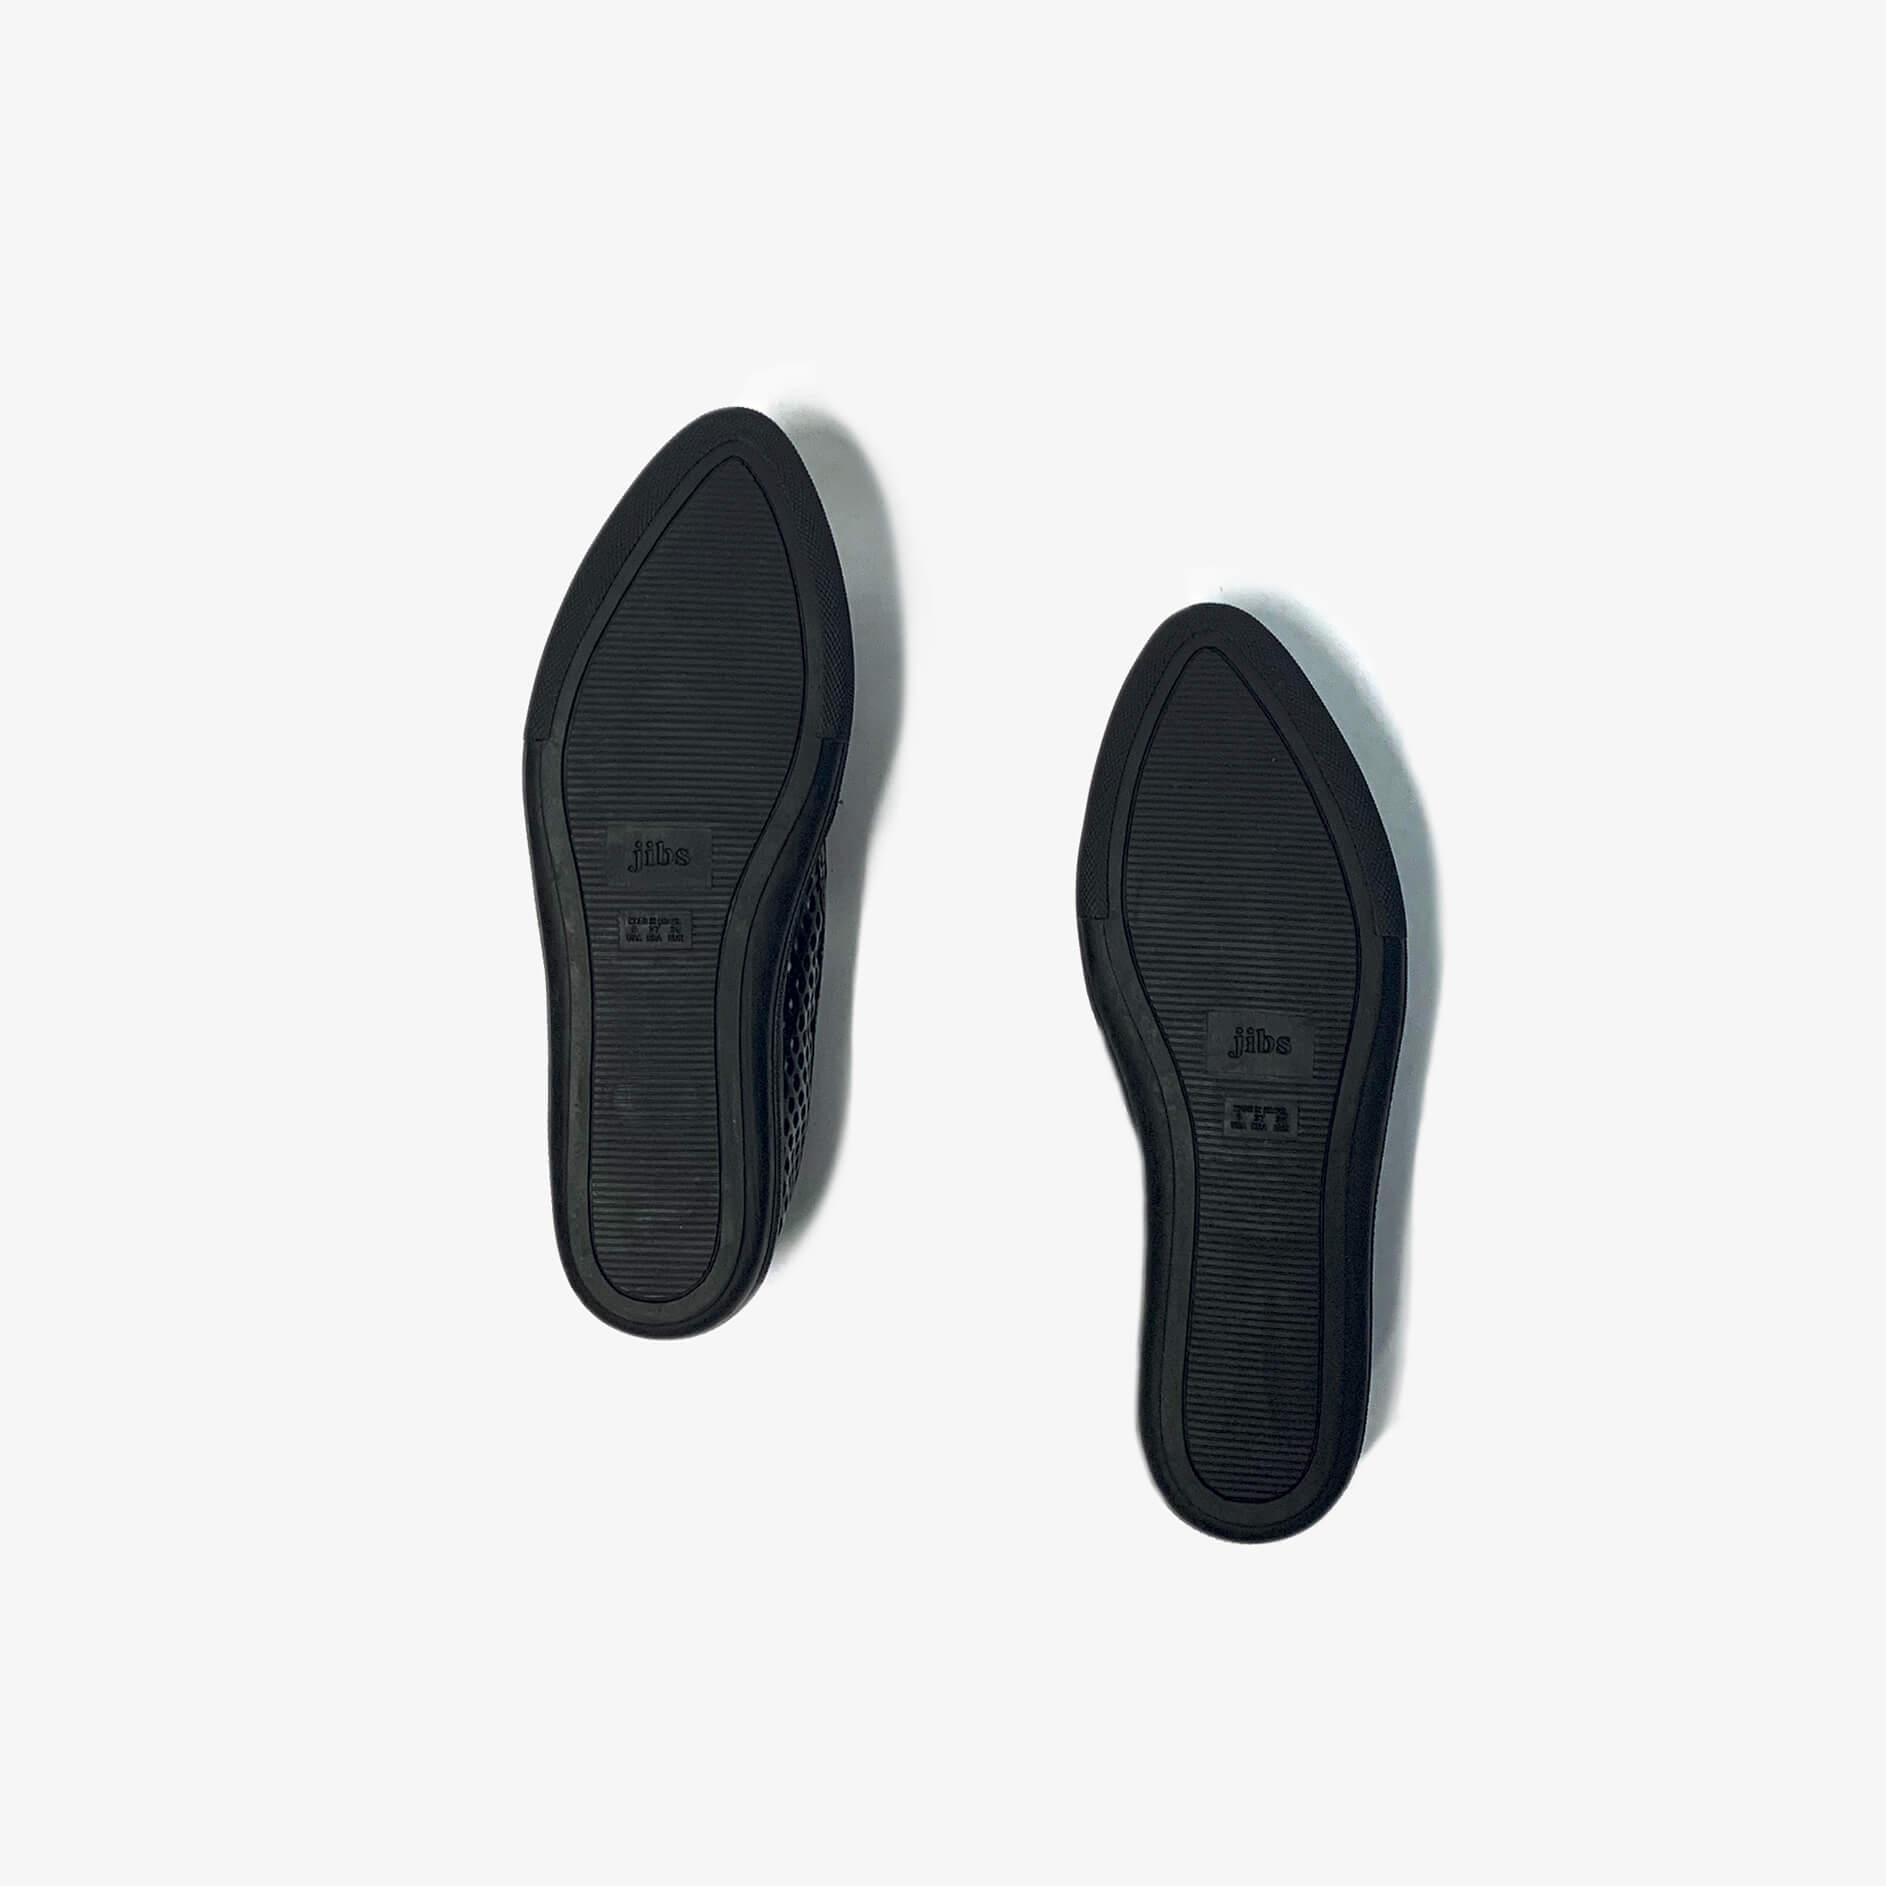 Jibs Slim Jet Black Royale + Onyx Slip On Sneaker Recycled Rubber Sole